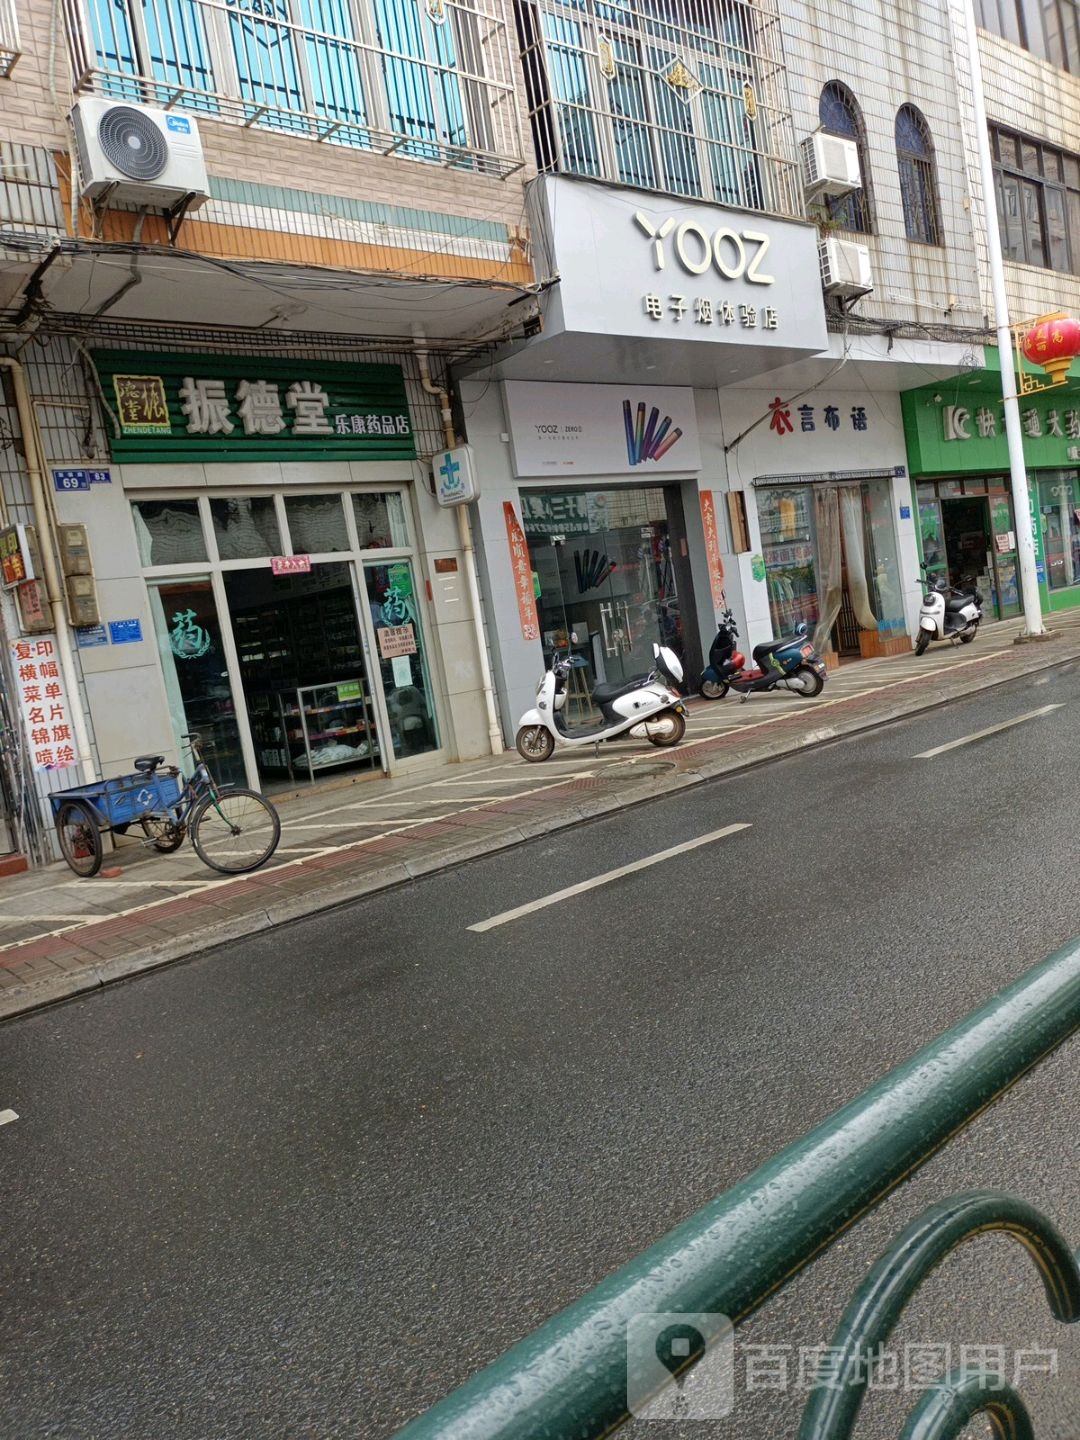 YOOZ电子烟体验店